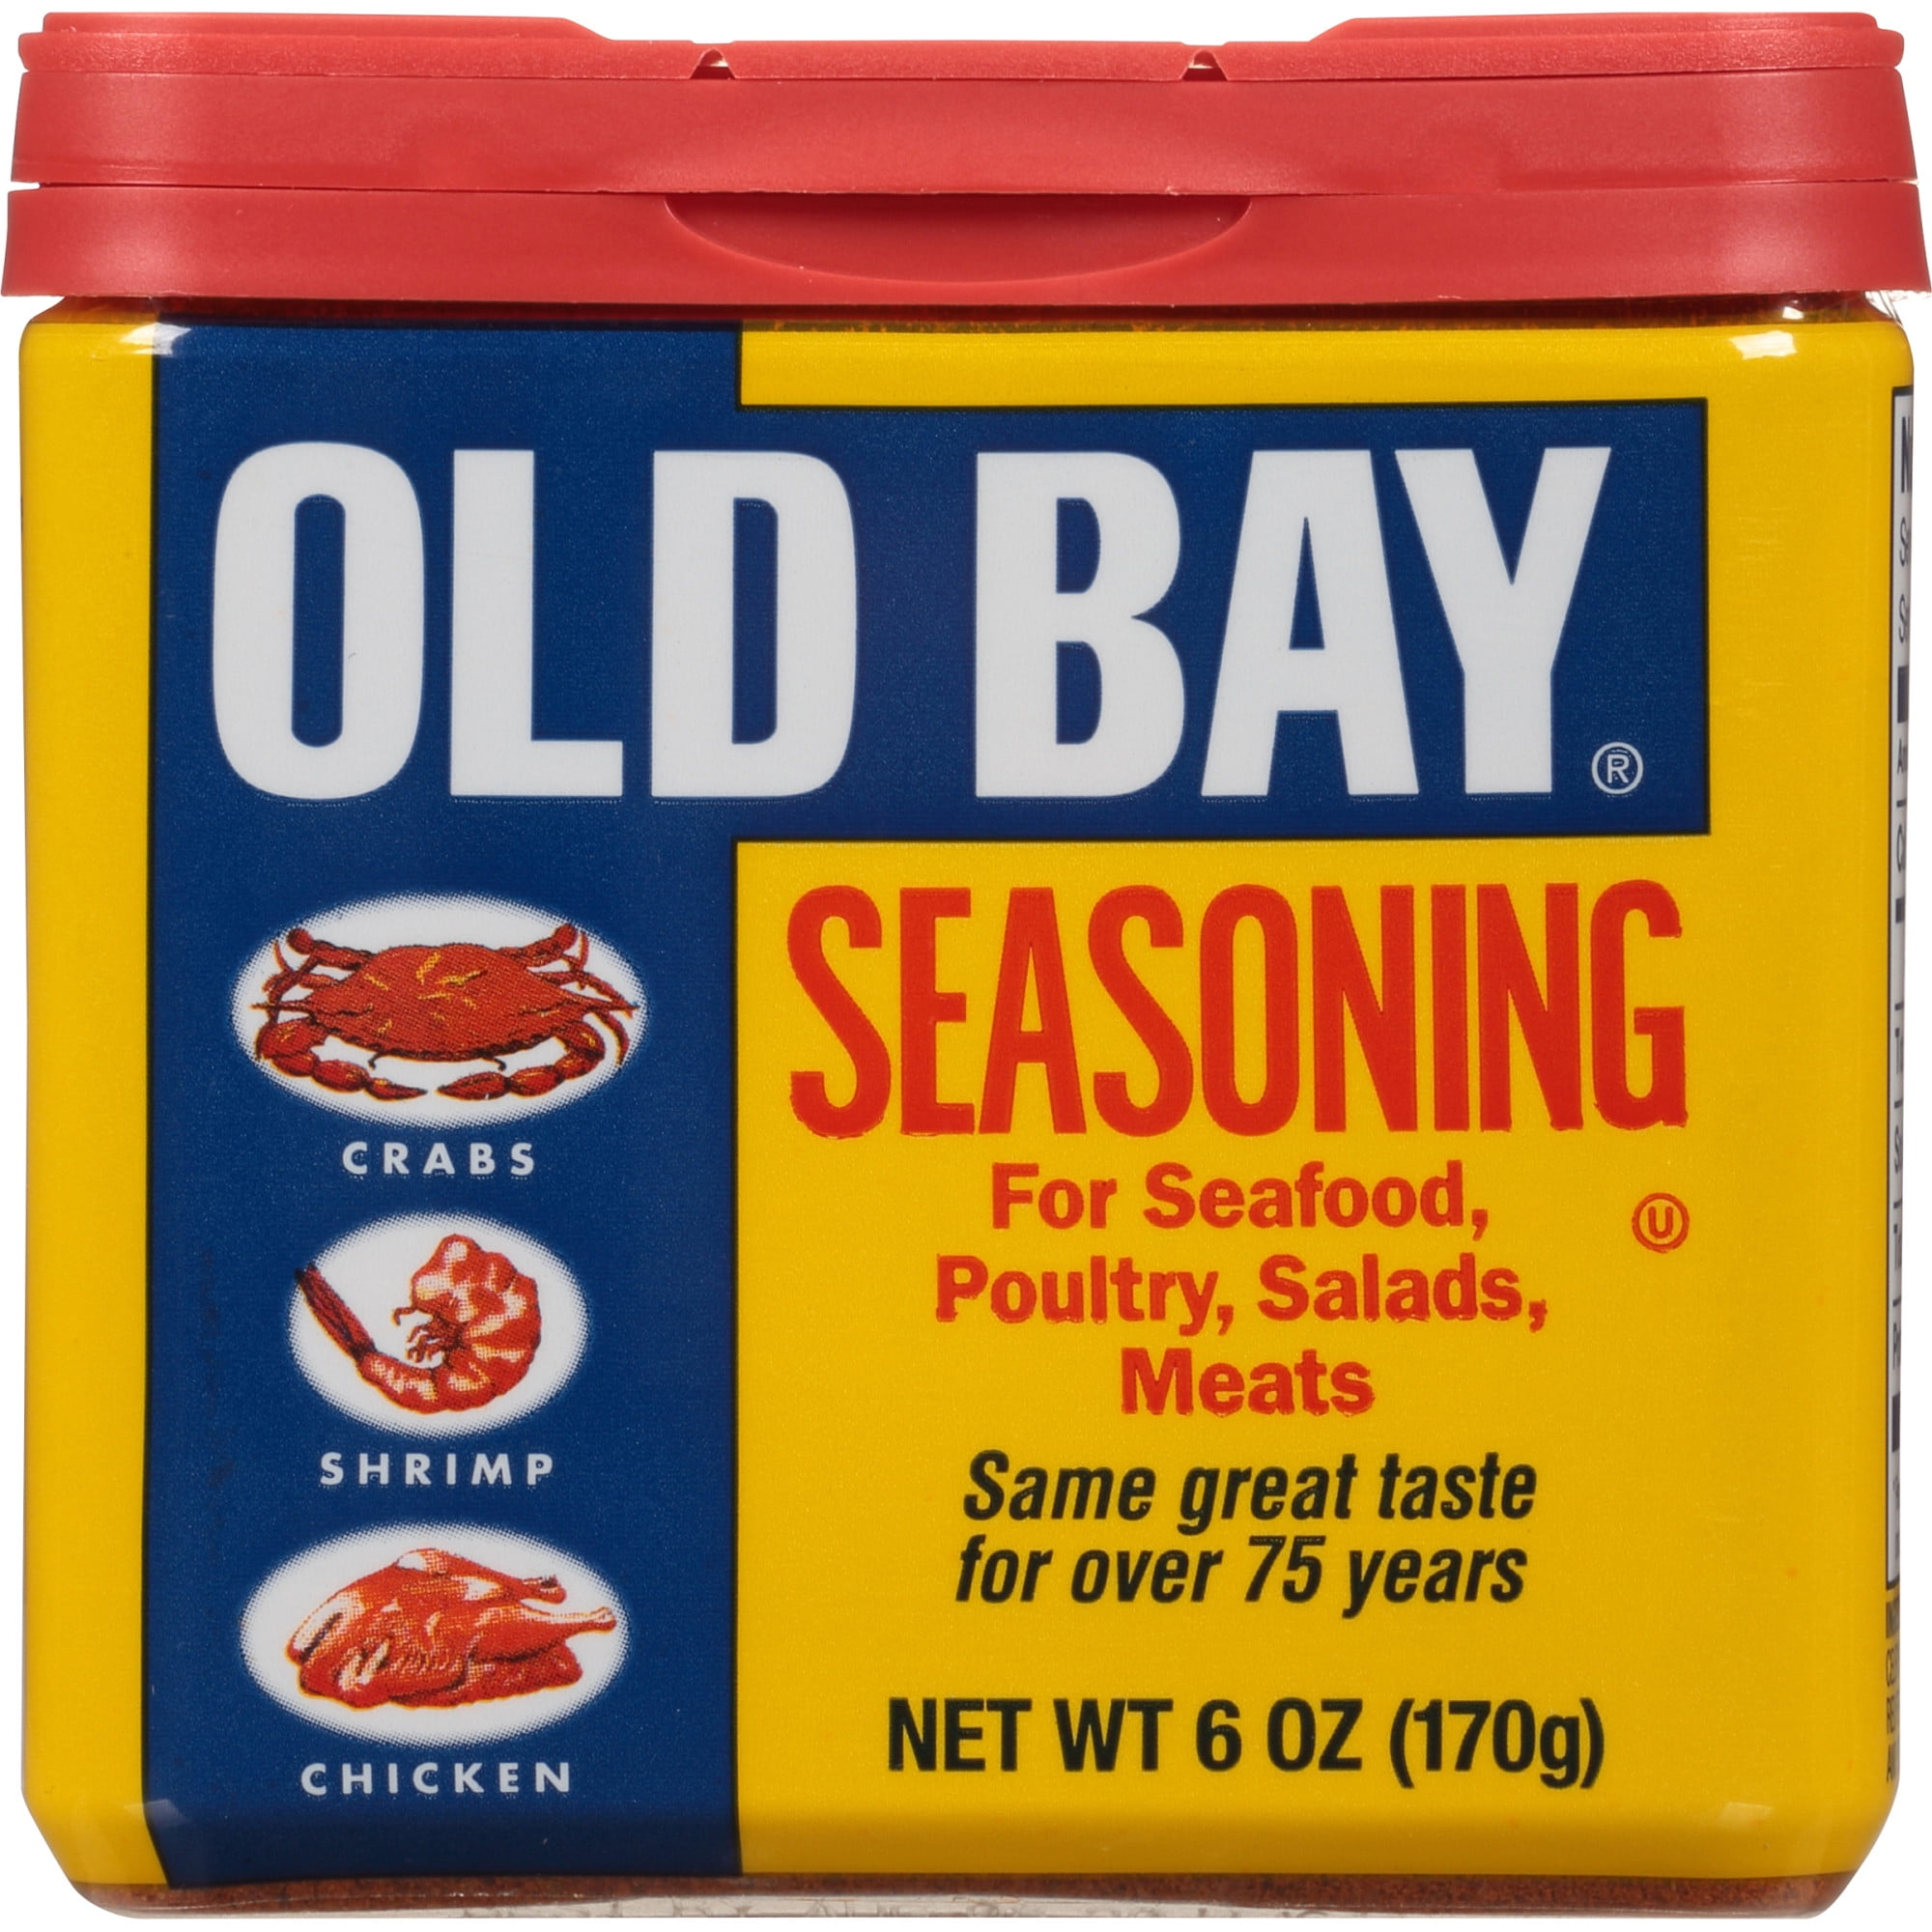 OLD BAY Classic Seafood Seasoning, 6 oz